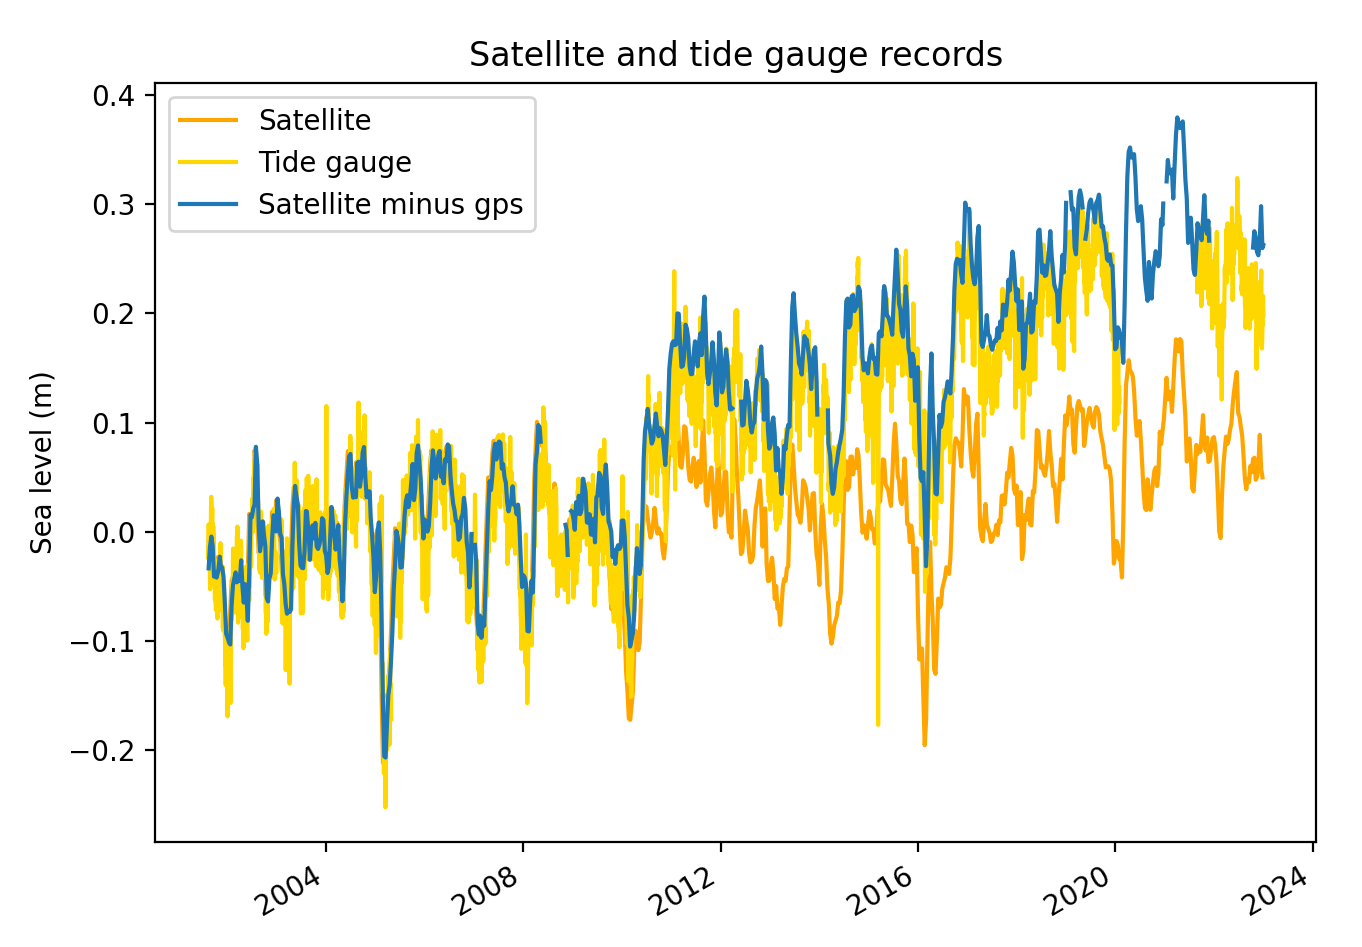 satellite versus tide gauge SLR records